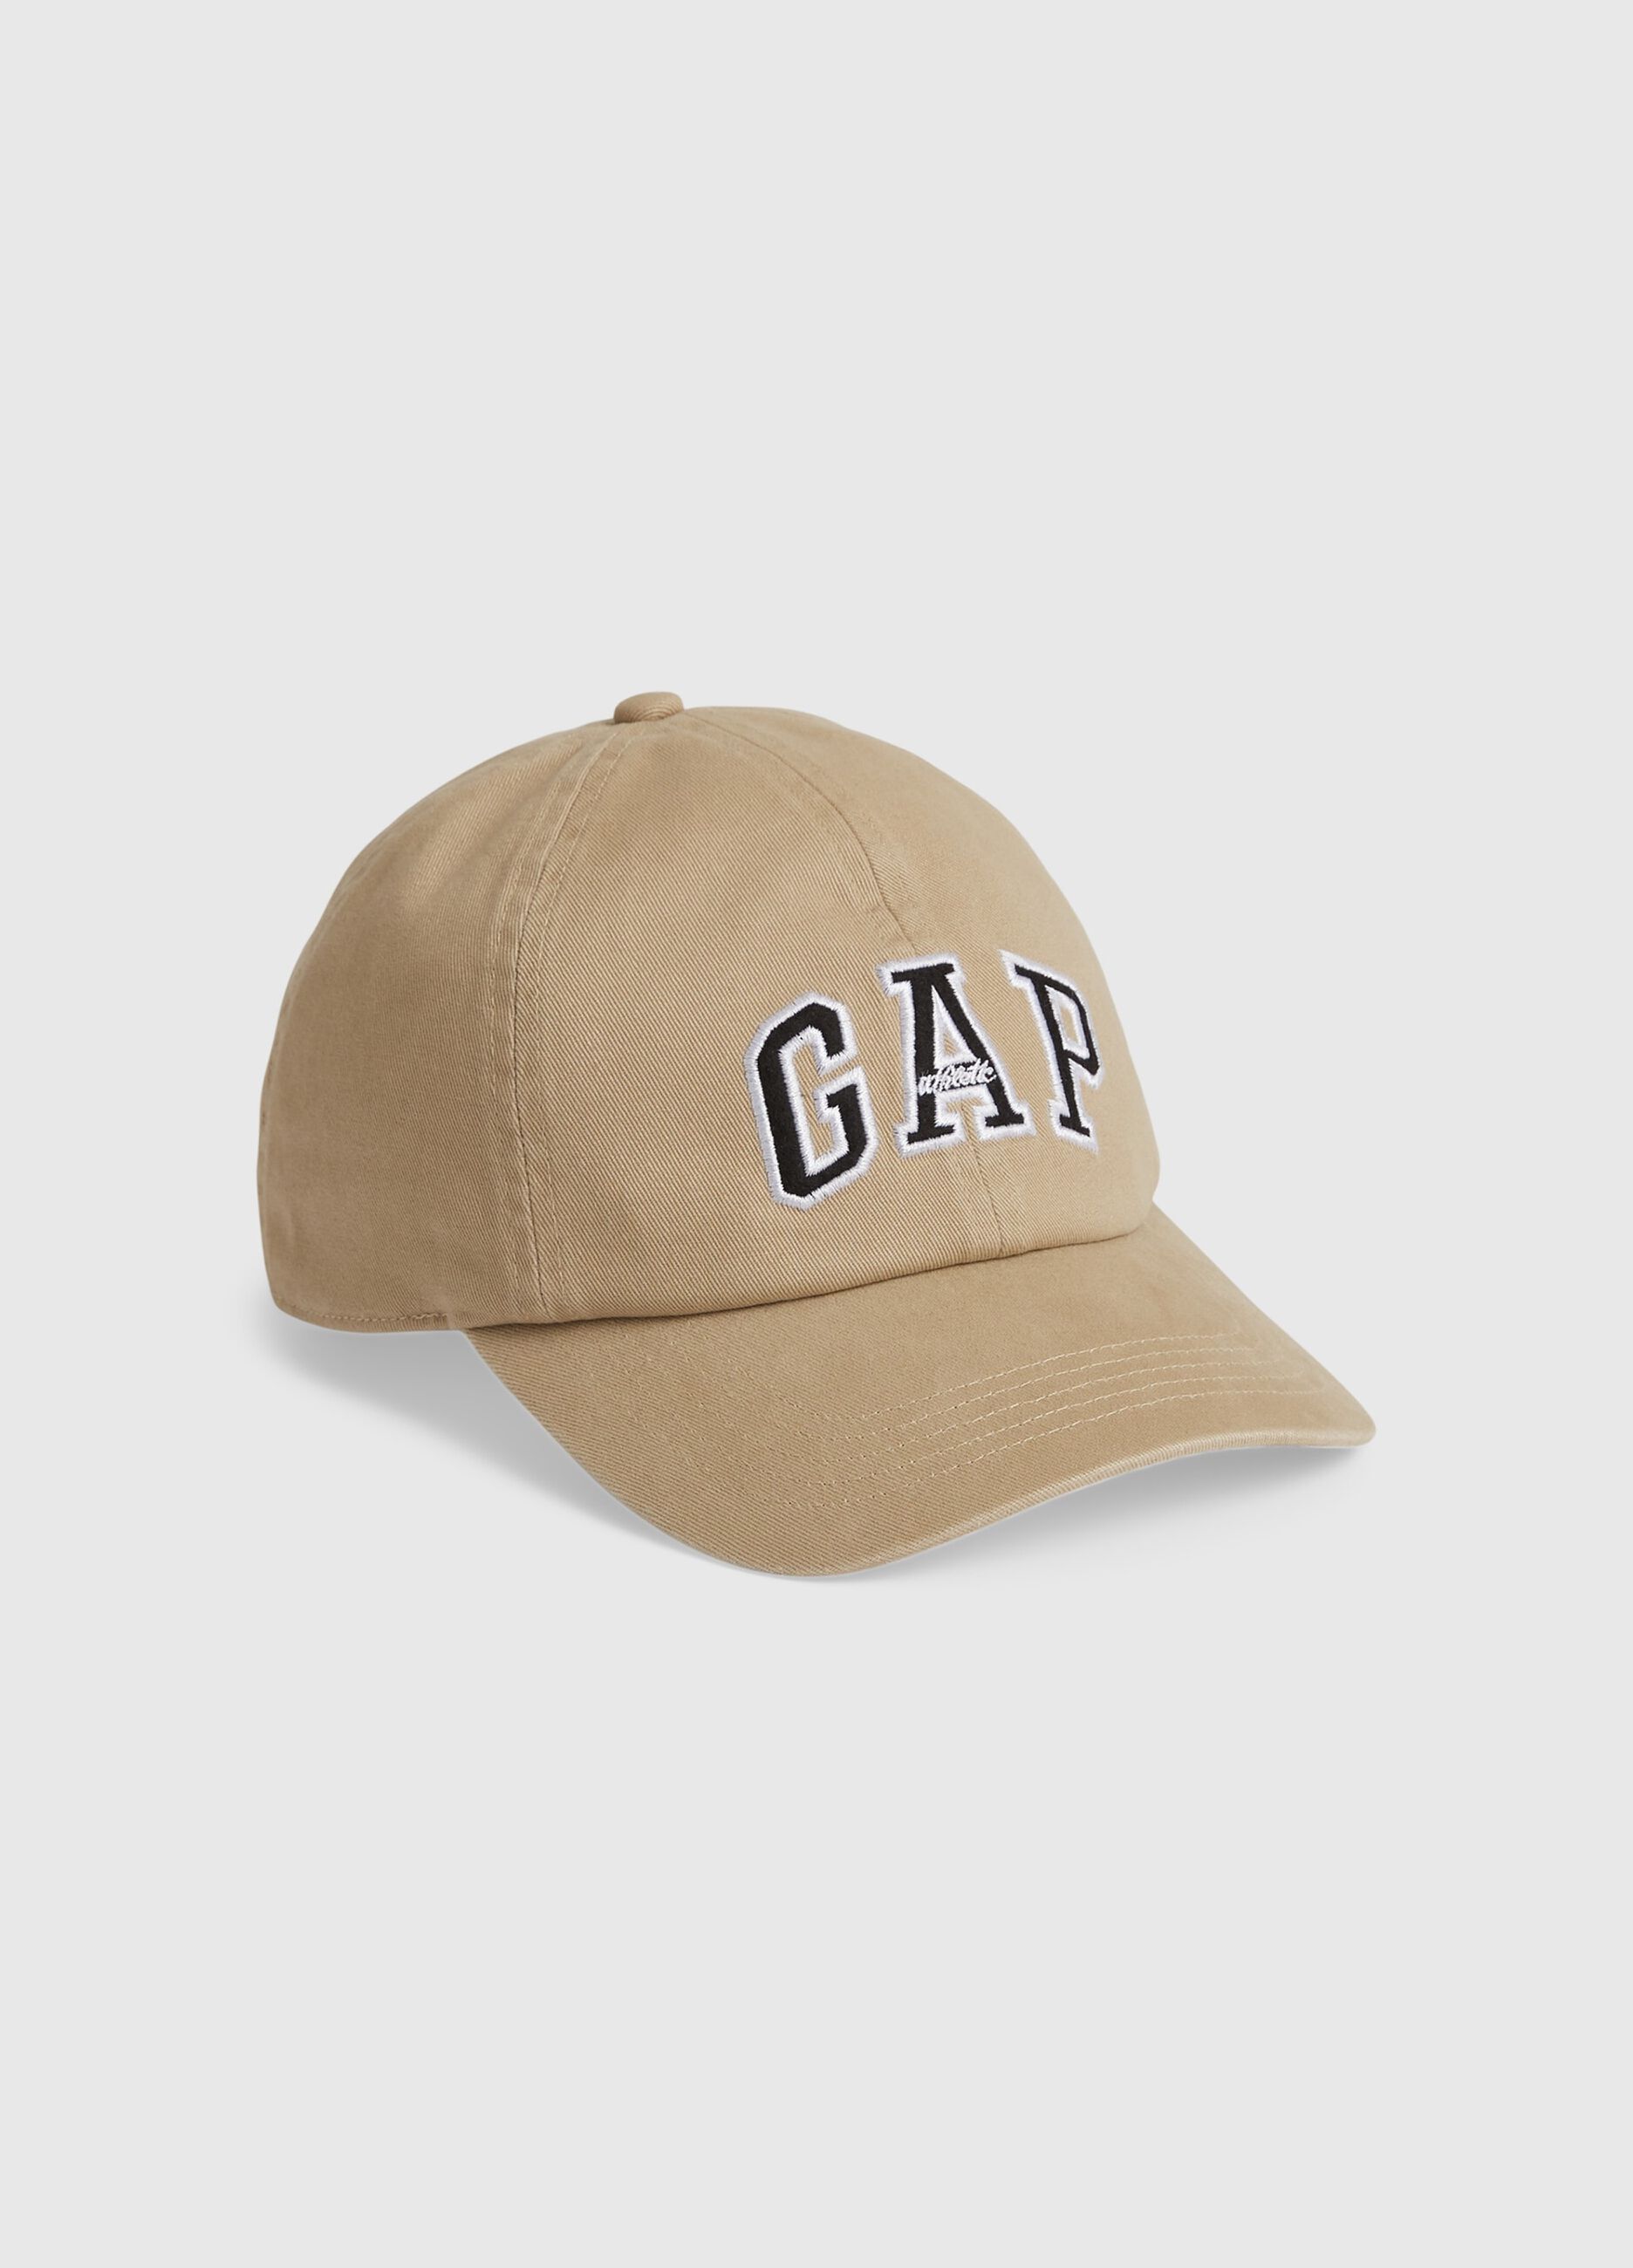 Baseball cap with Athletics logo embroidery